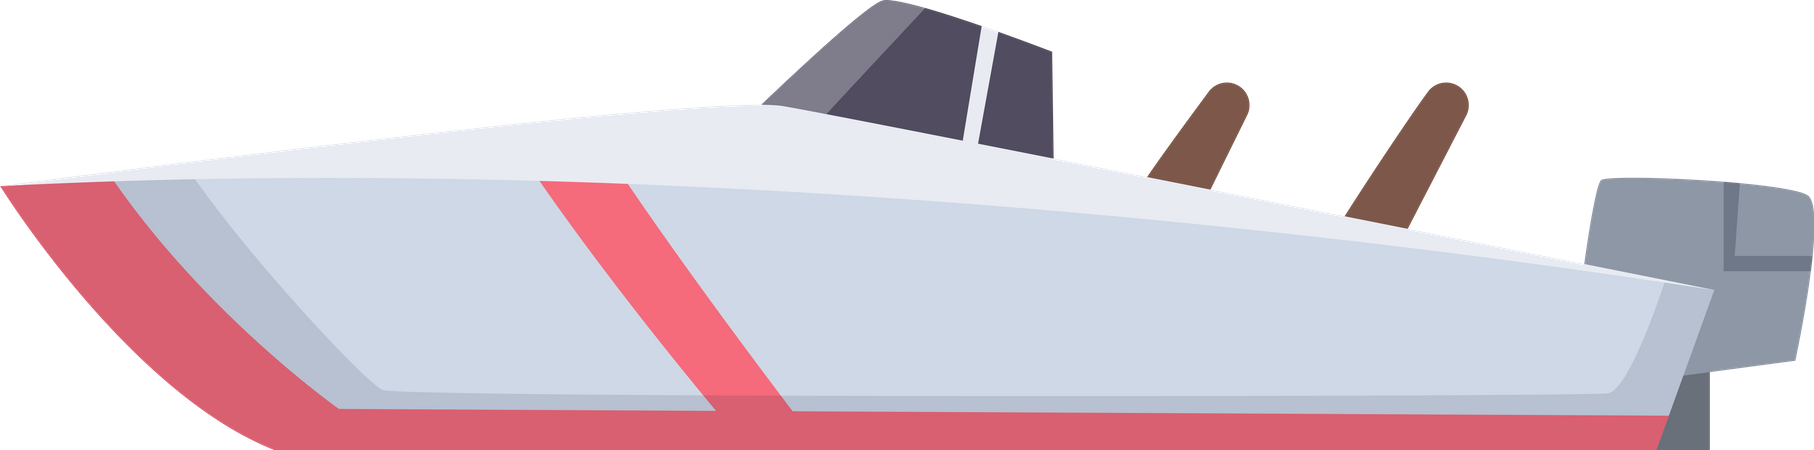 Fast Boat  Illustration